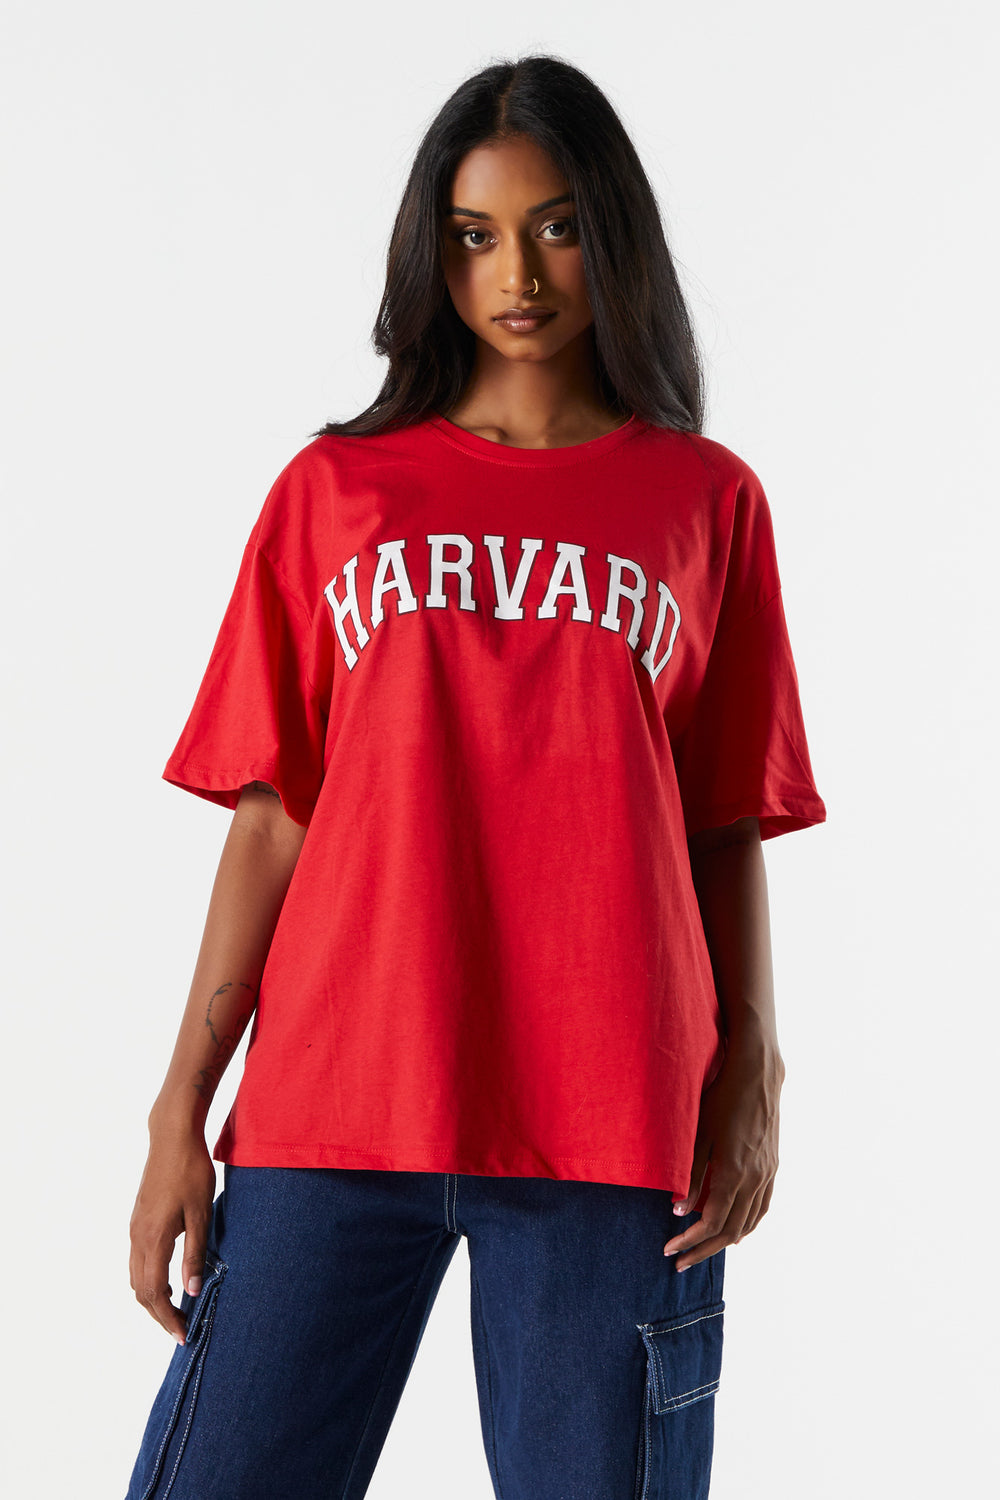 Harvard Graphic Boyfriend T-Shirt Harvard Graphic Boyfriend T-Shirt 1